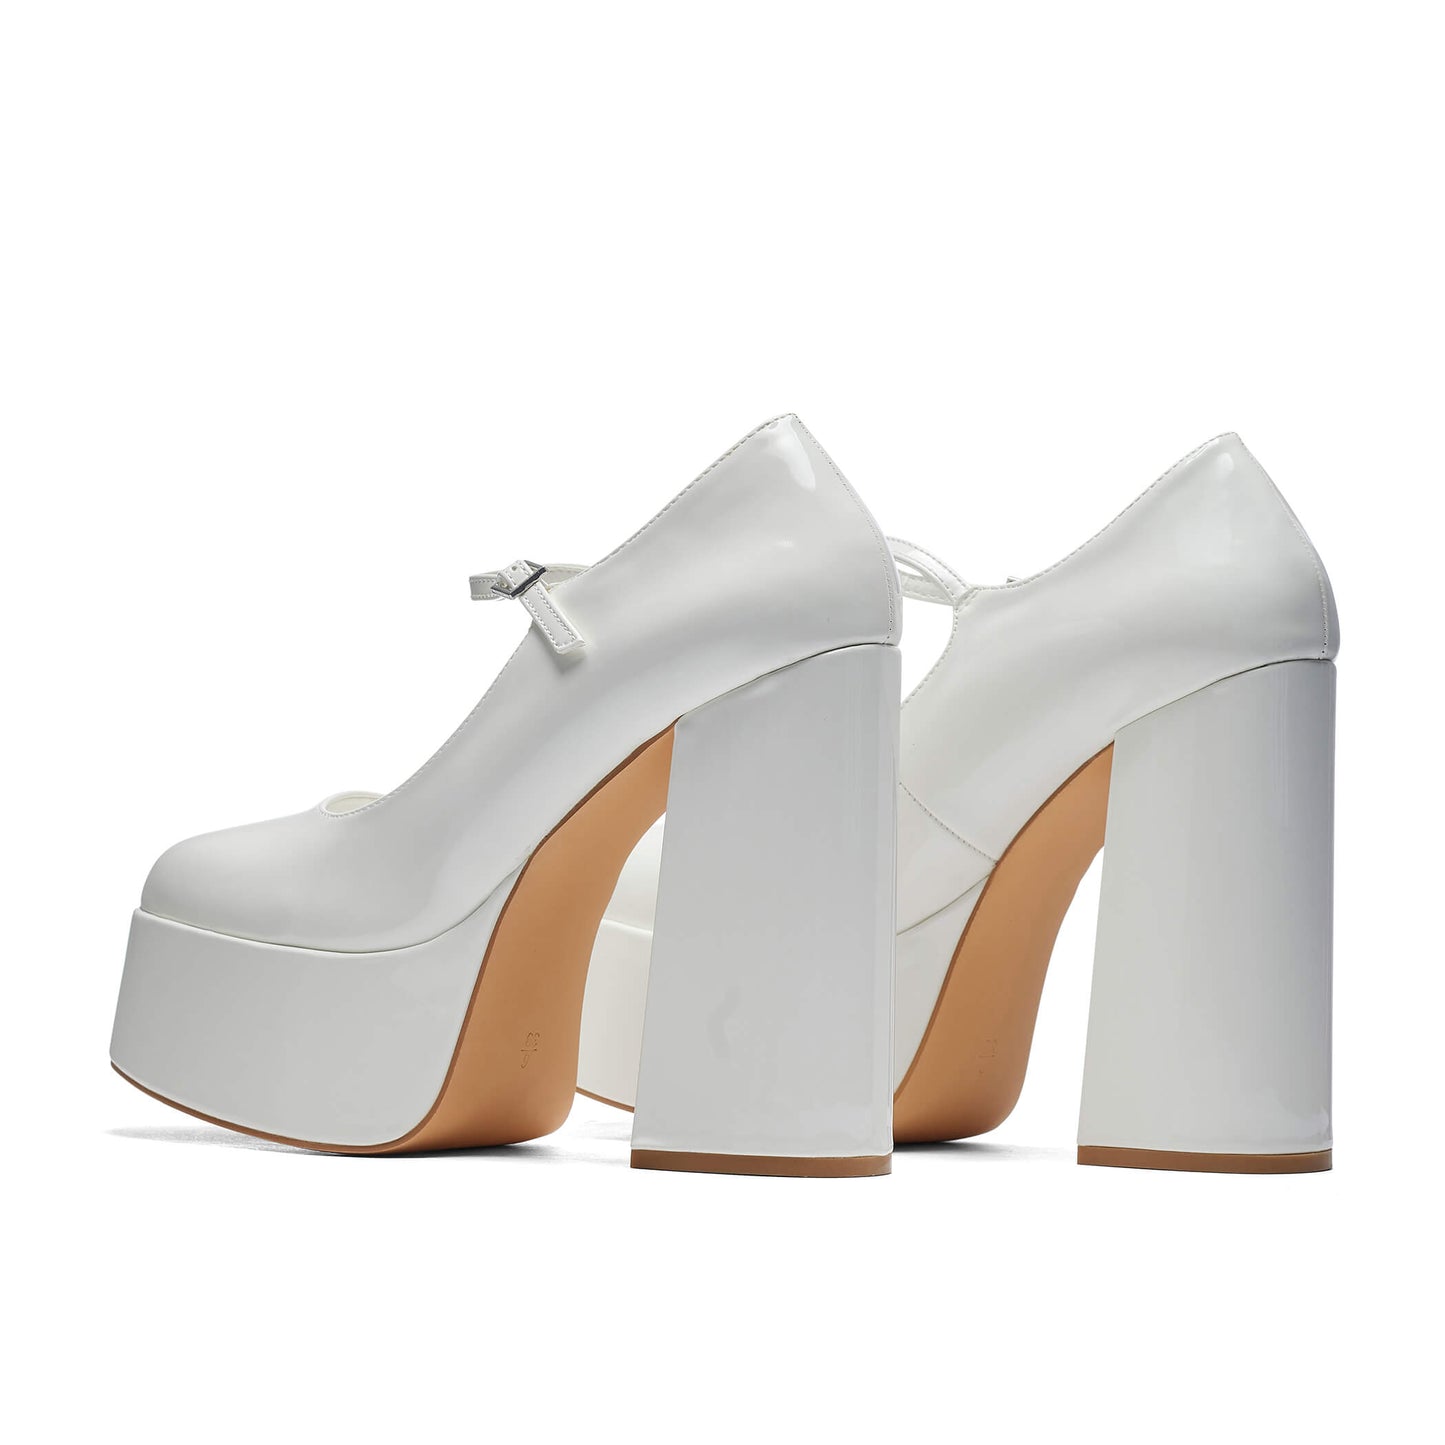 Darkbloom White Patent Platform Heels - Shoes - KOI Footwear - White - Back View